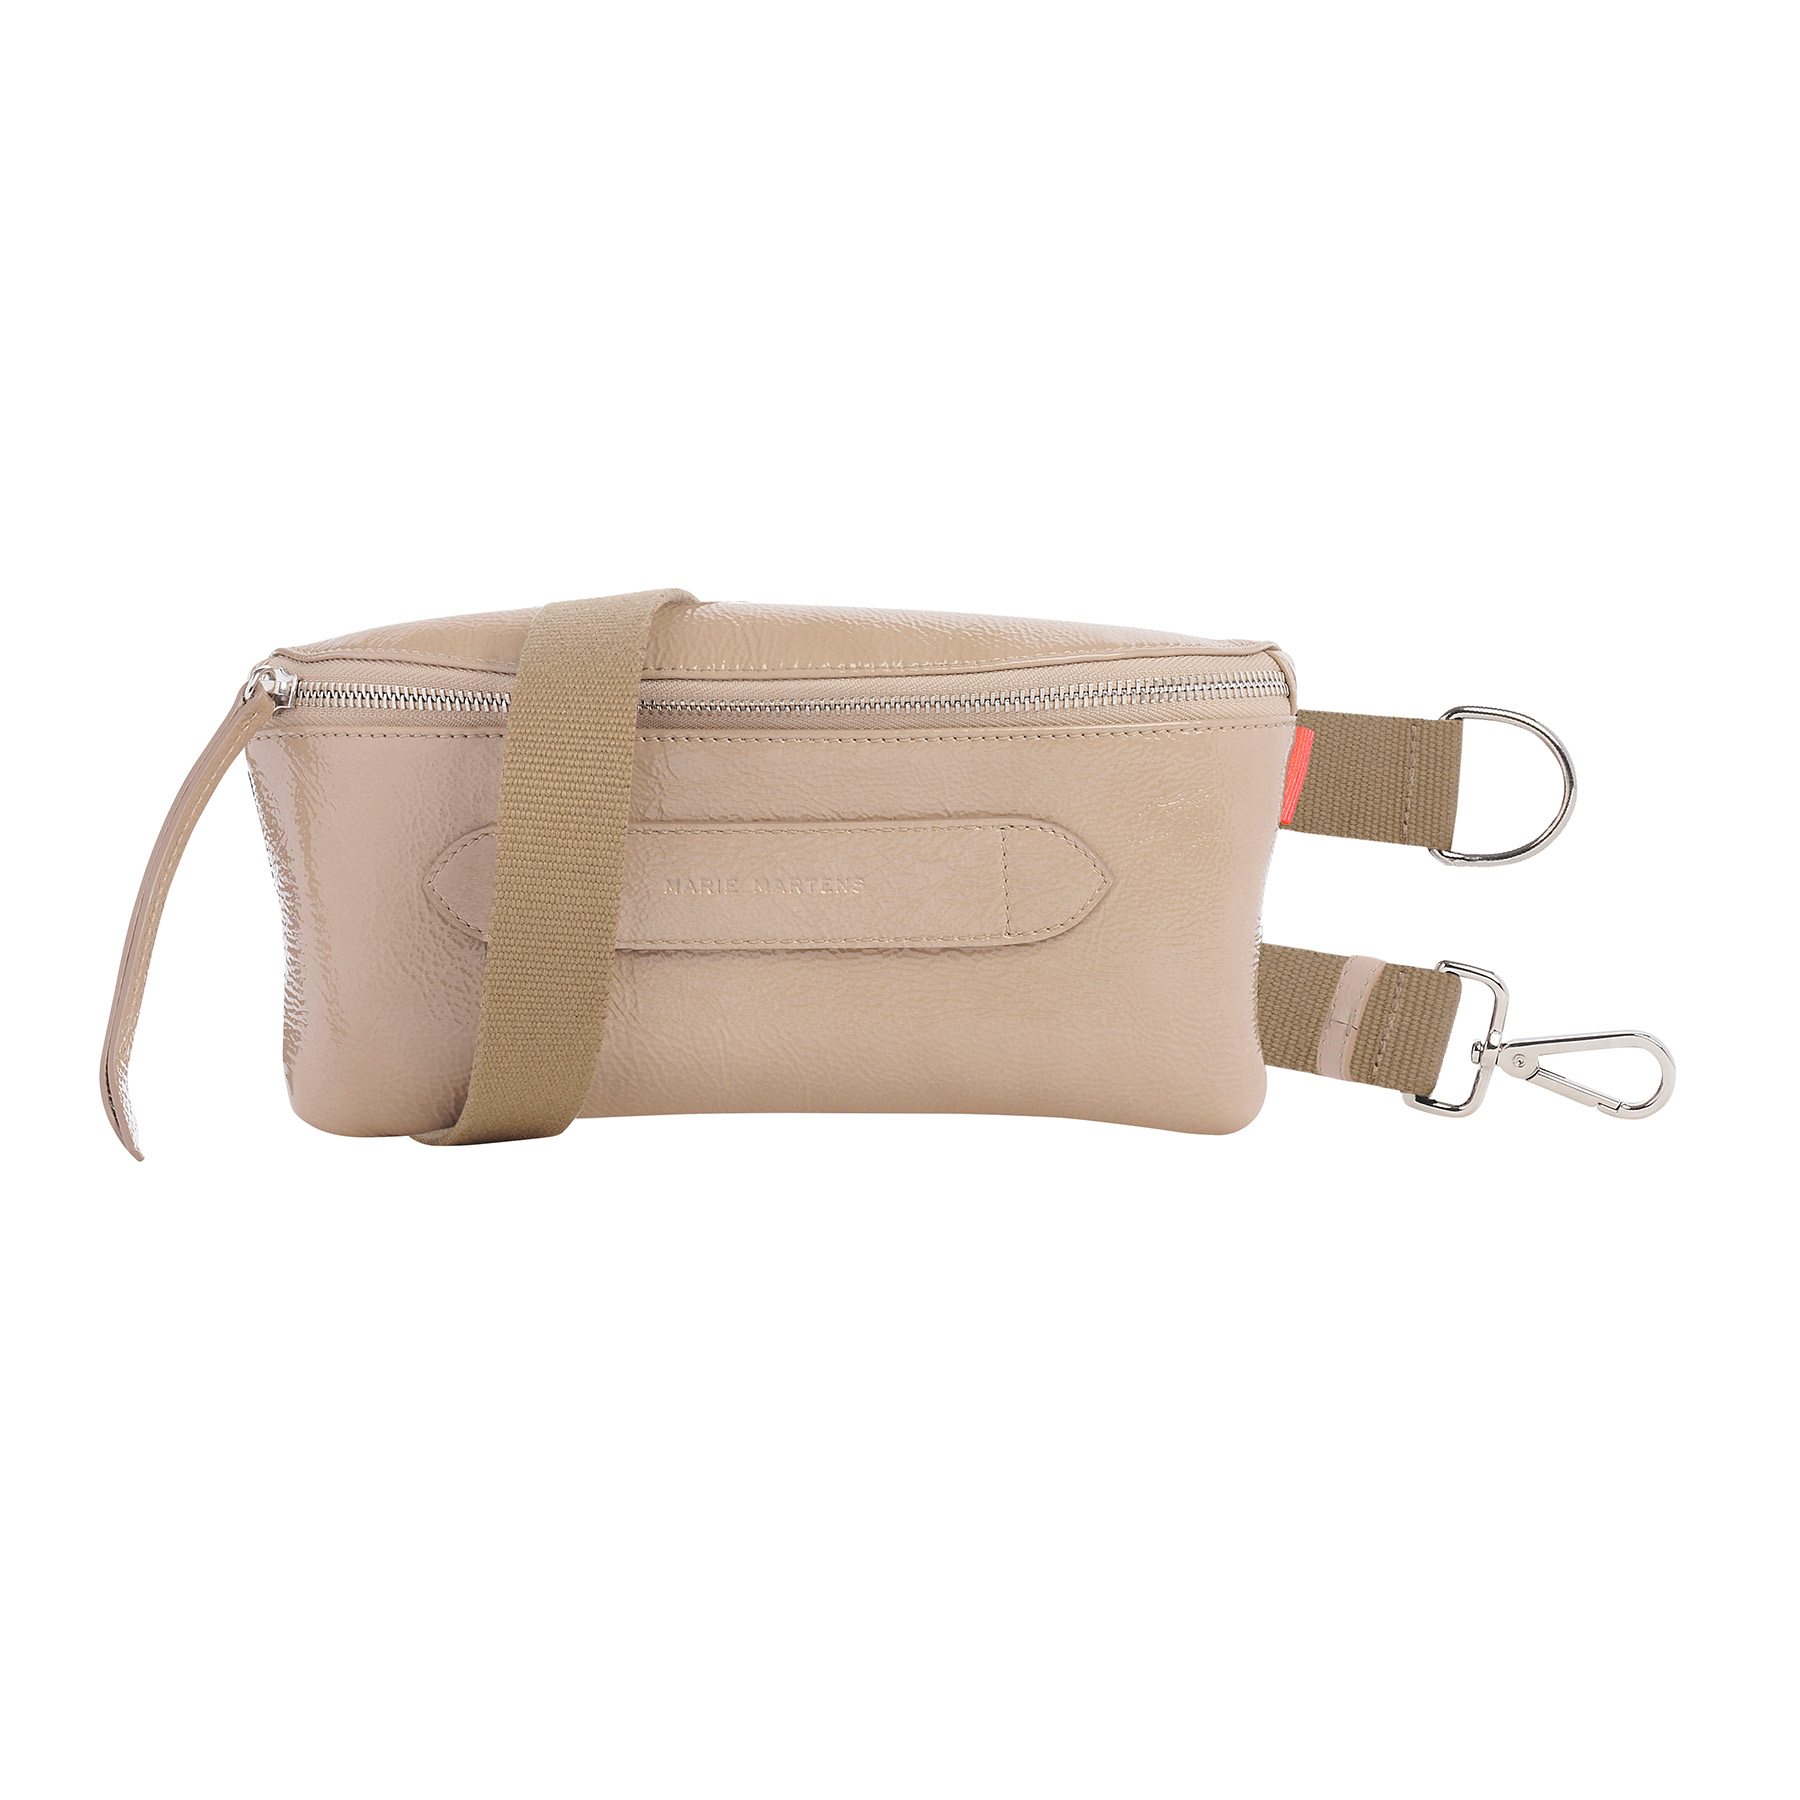 Marie Martens Coachella Beige Patent Belt Bag